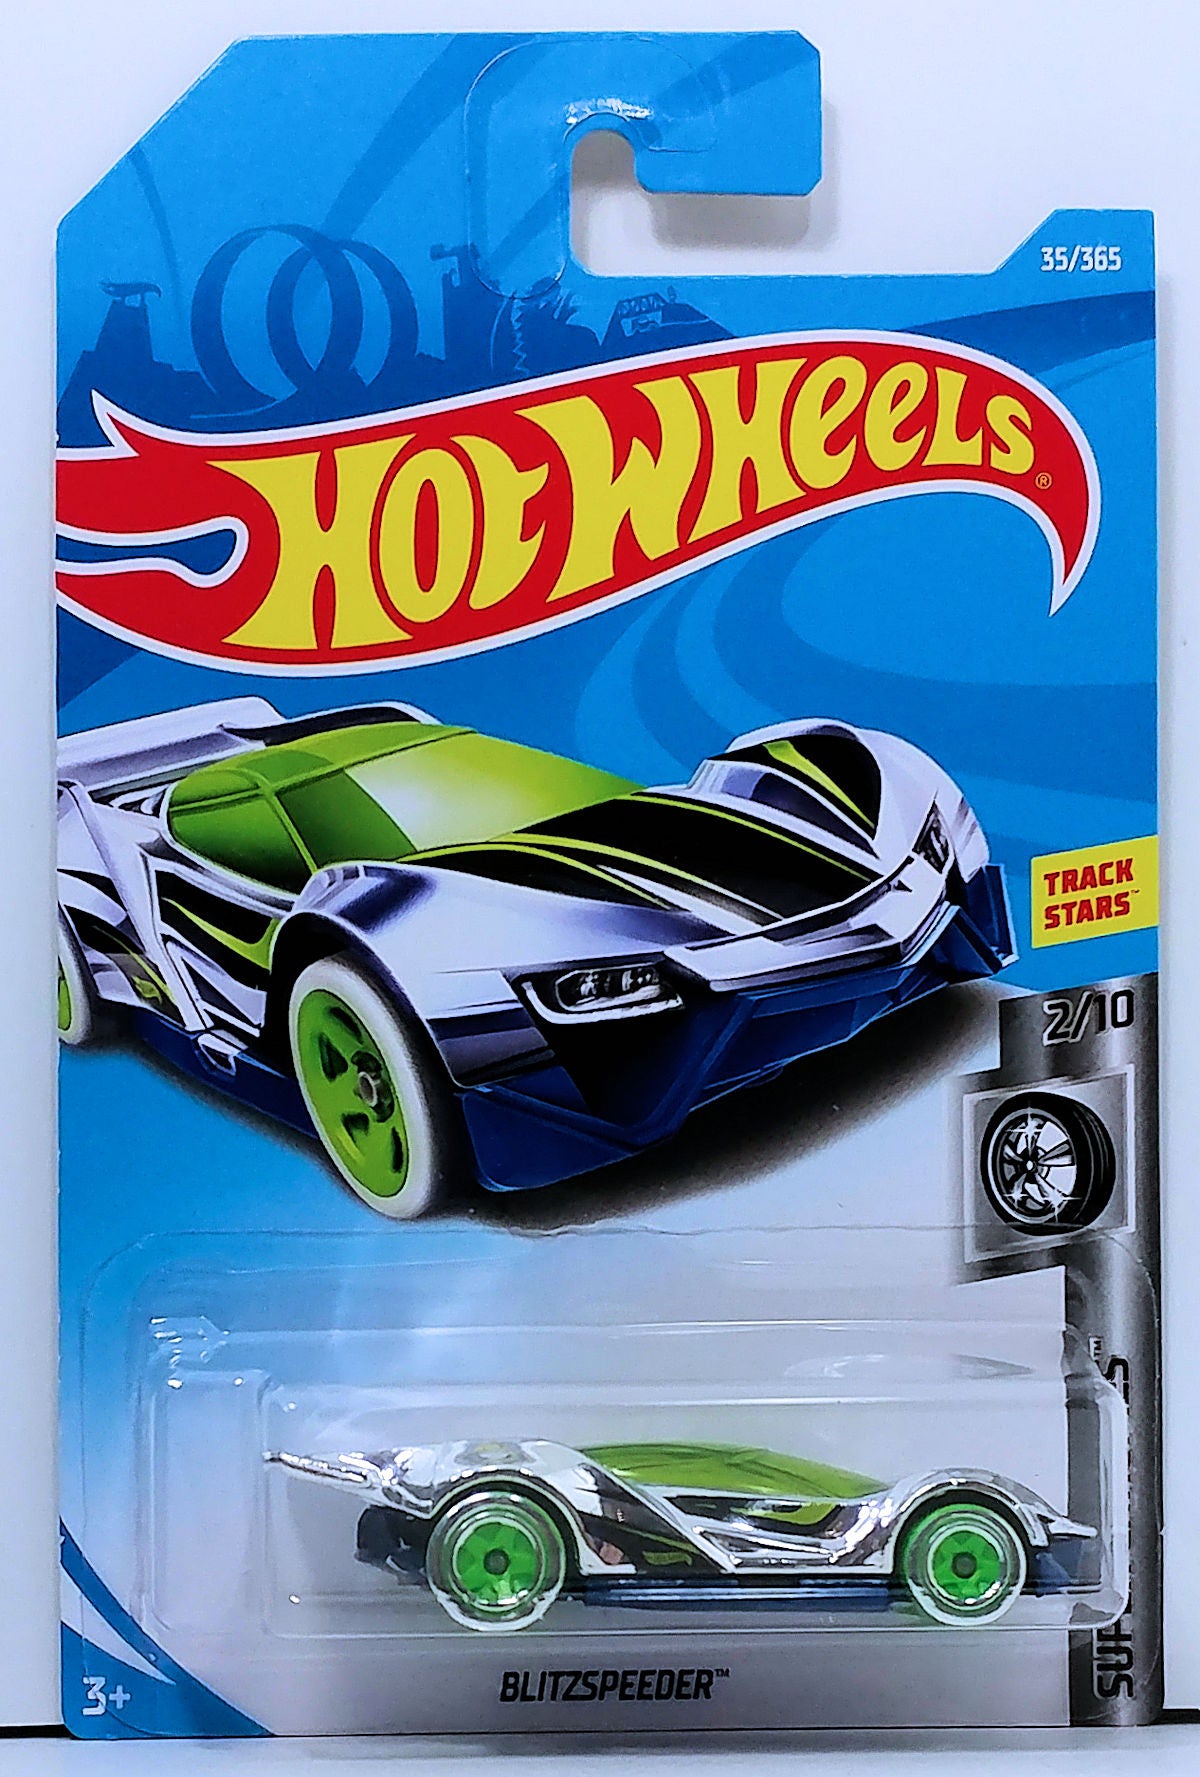 Hot Wheels 2018 - Collector # 035/365 - Super Chromes 2/10 - Blitzspeeder - Chrome - International Card